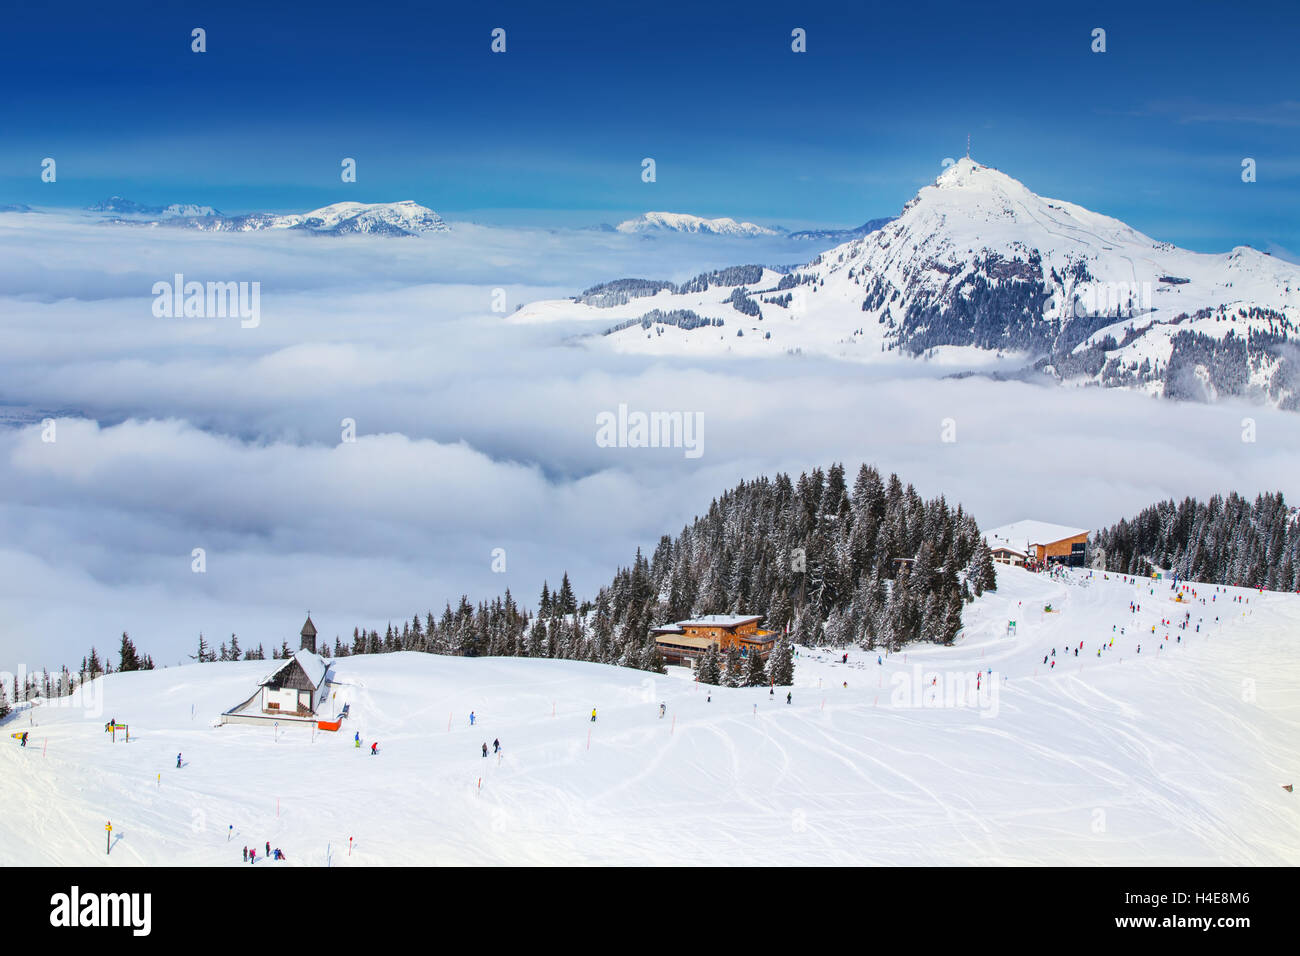 Skier skiing and enjoying the view to Tyrolian Alps in Austria from Kitzbuehel ski resort. Stock Photo